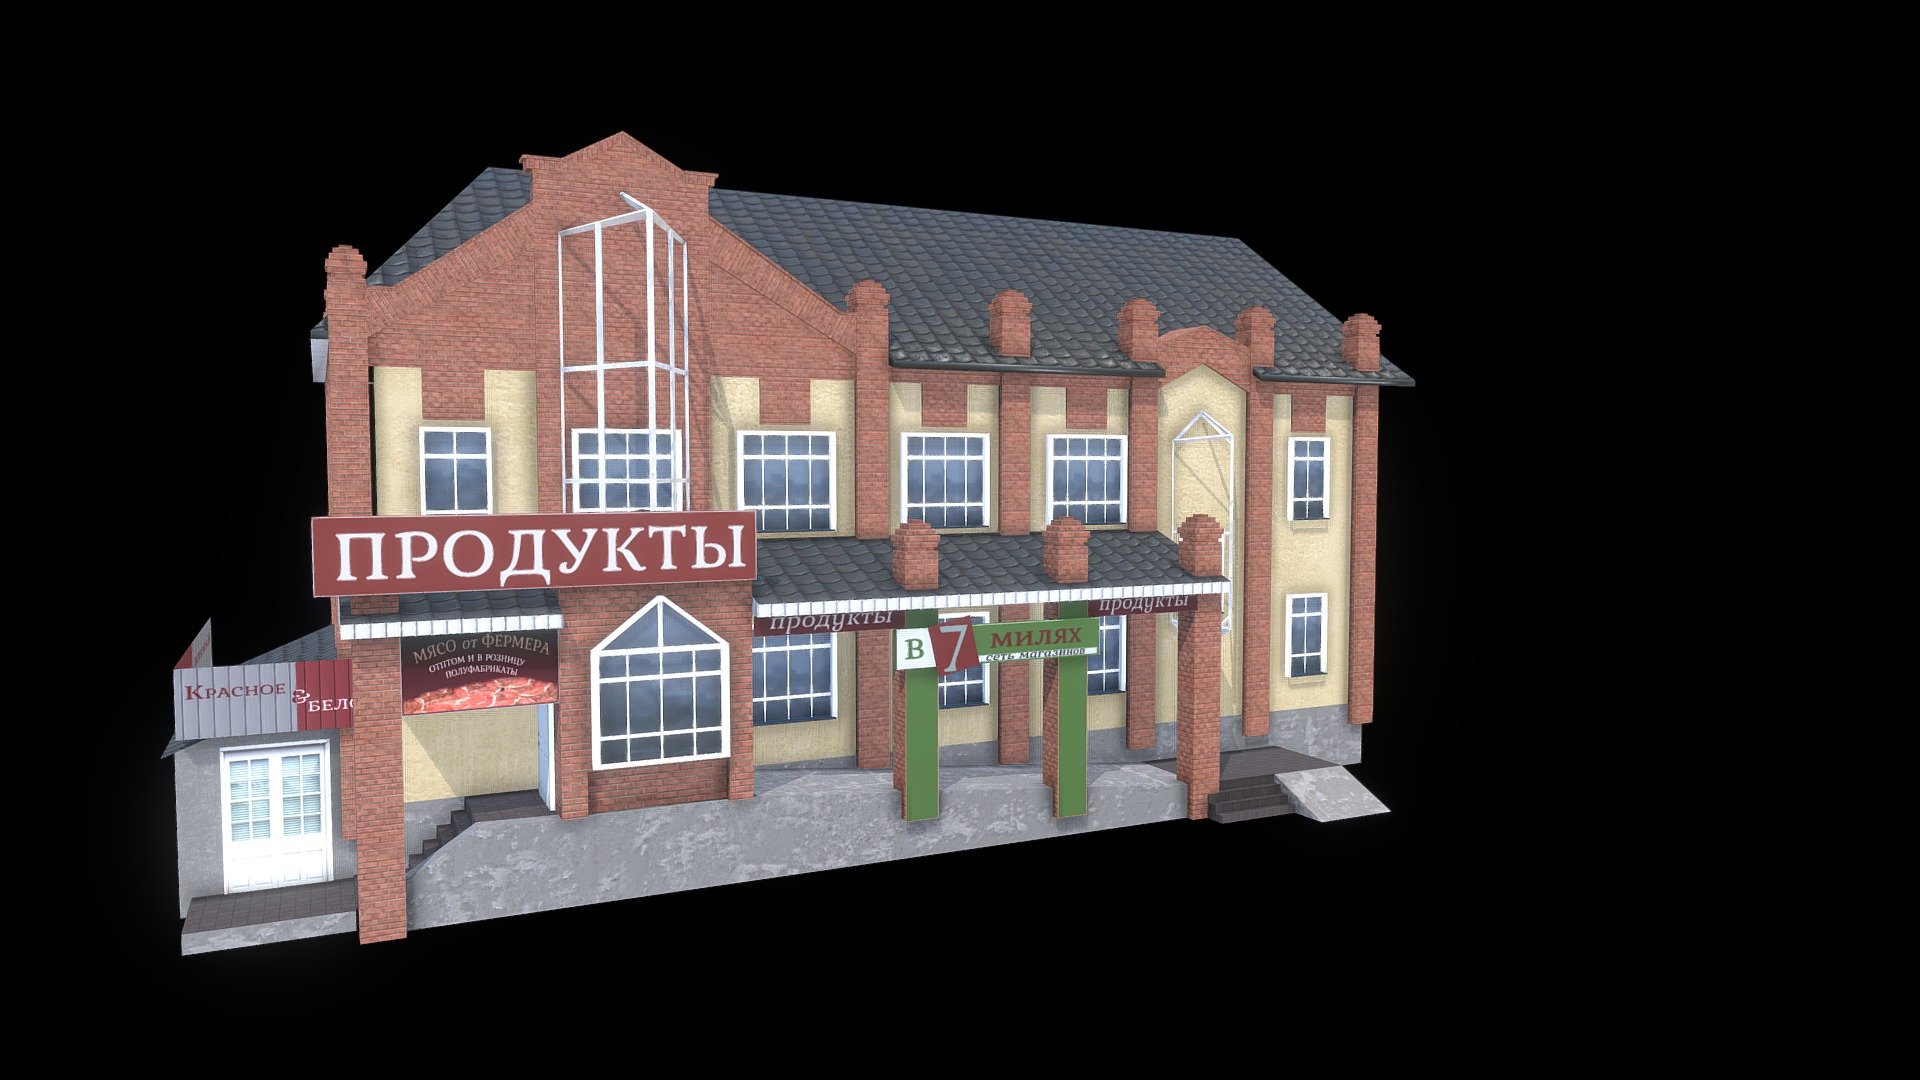 How i build this:
https://youtu.be/ZUw5bDYR9OI - Russian building, shops - 3D model by Alekv 3d model